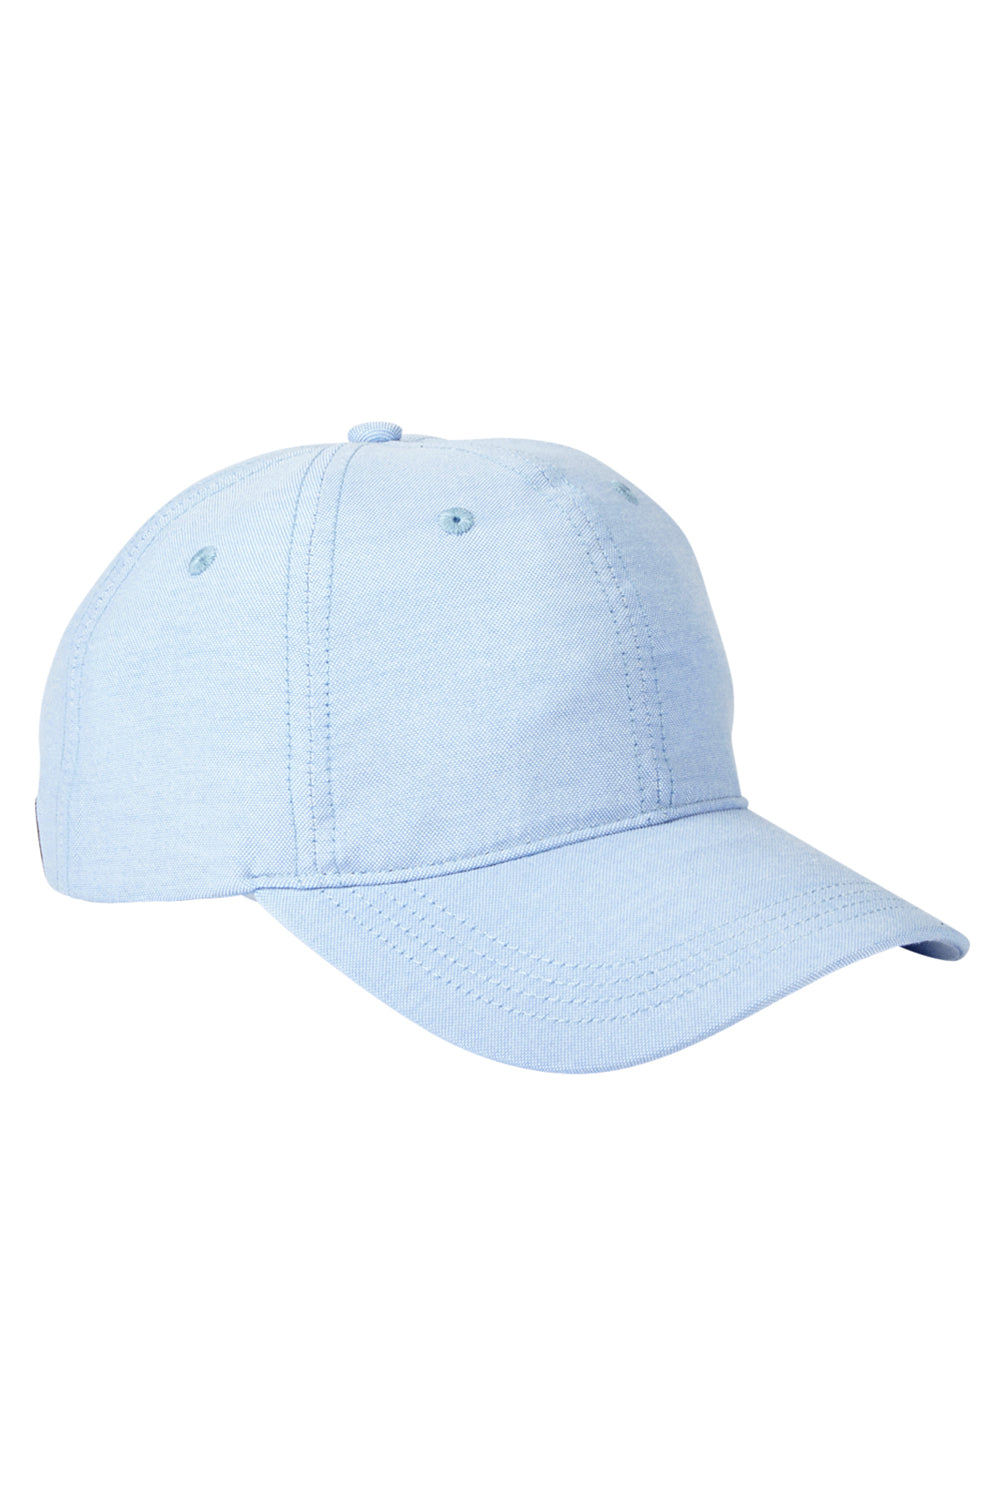 Big Accessories BA614 Mens Summer Prep Adjustable Hat Blue Front